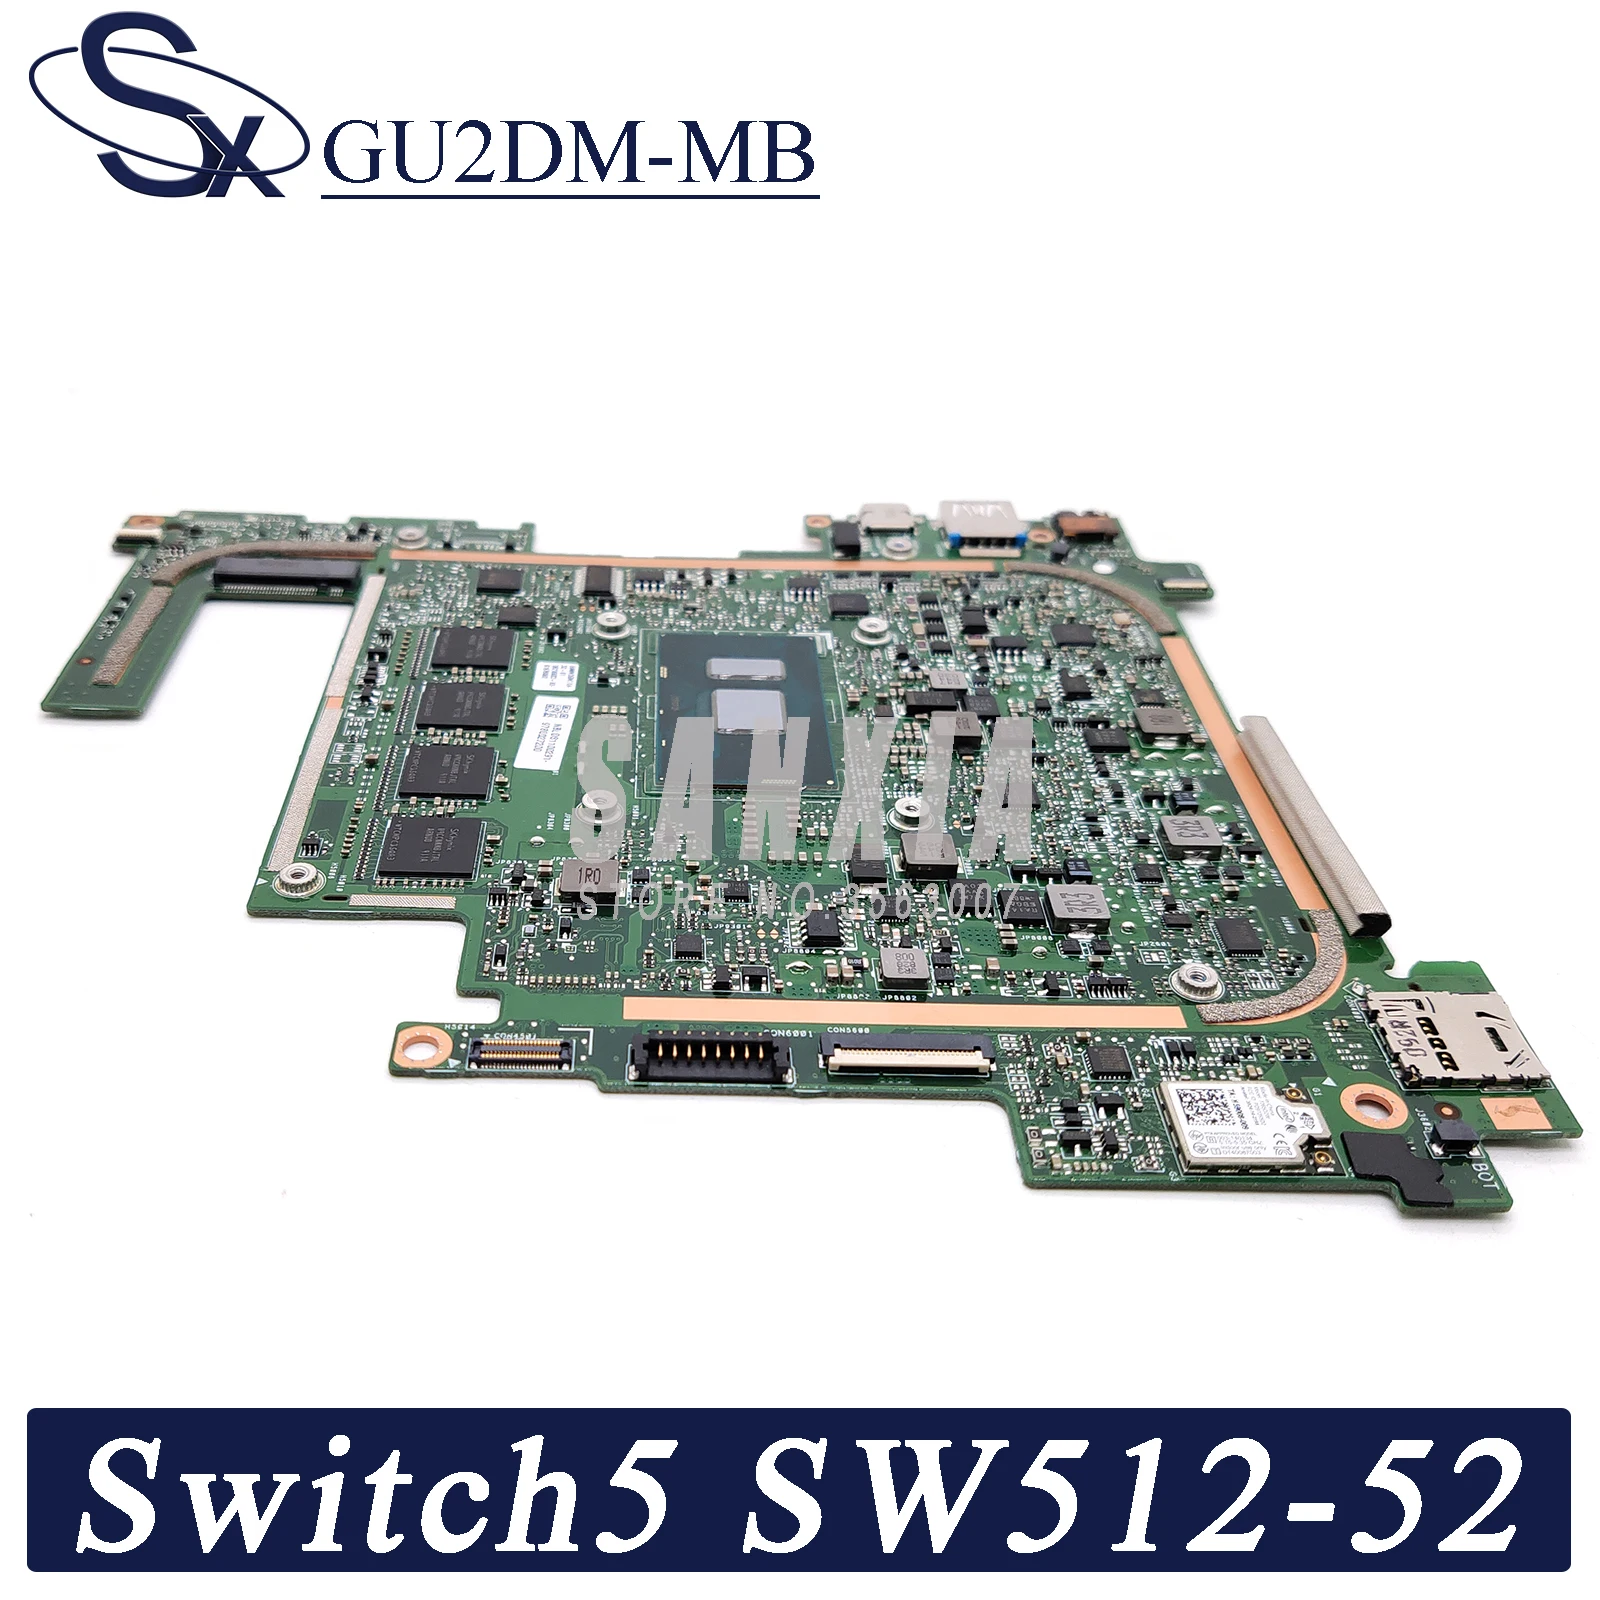 kefu gu2dm mb laptop motherboard for acer switch5 sw512 52 original mainboard 8gb ram i5 7200u free global shipping